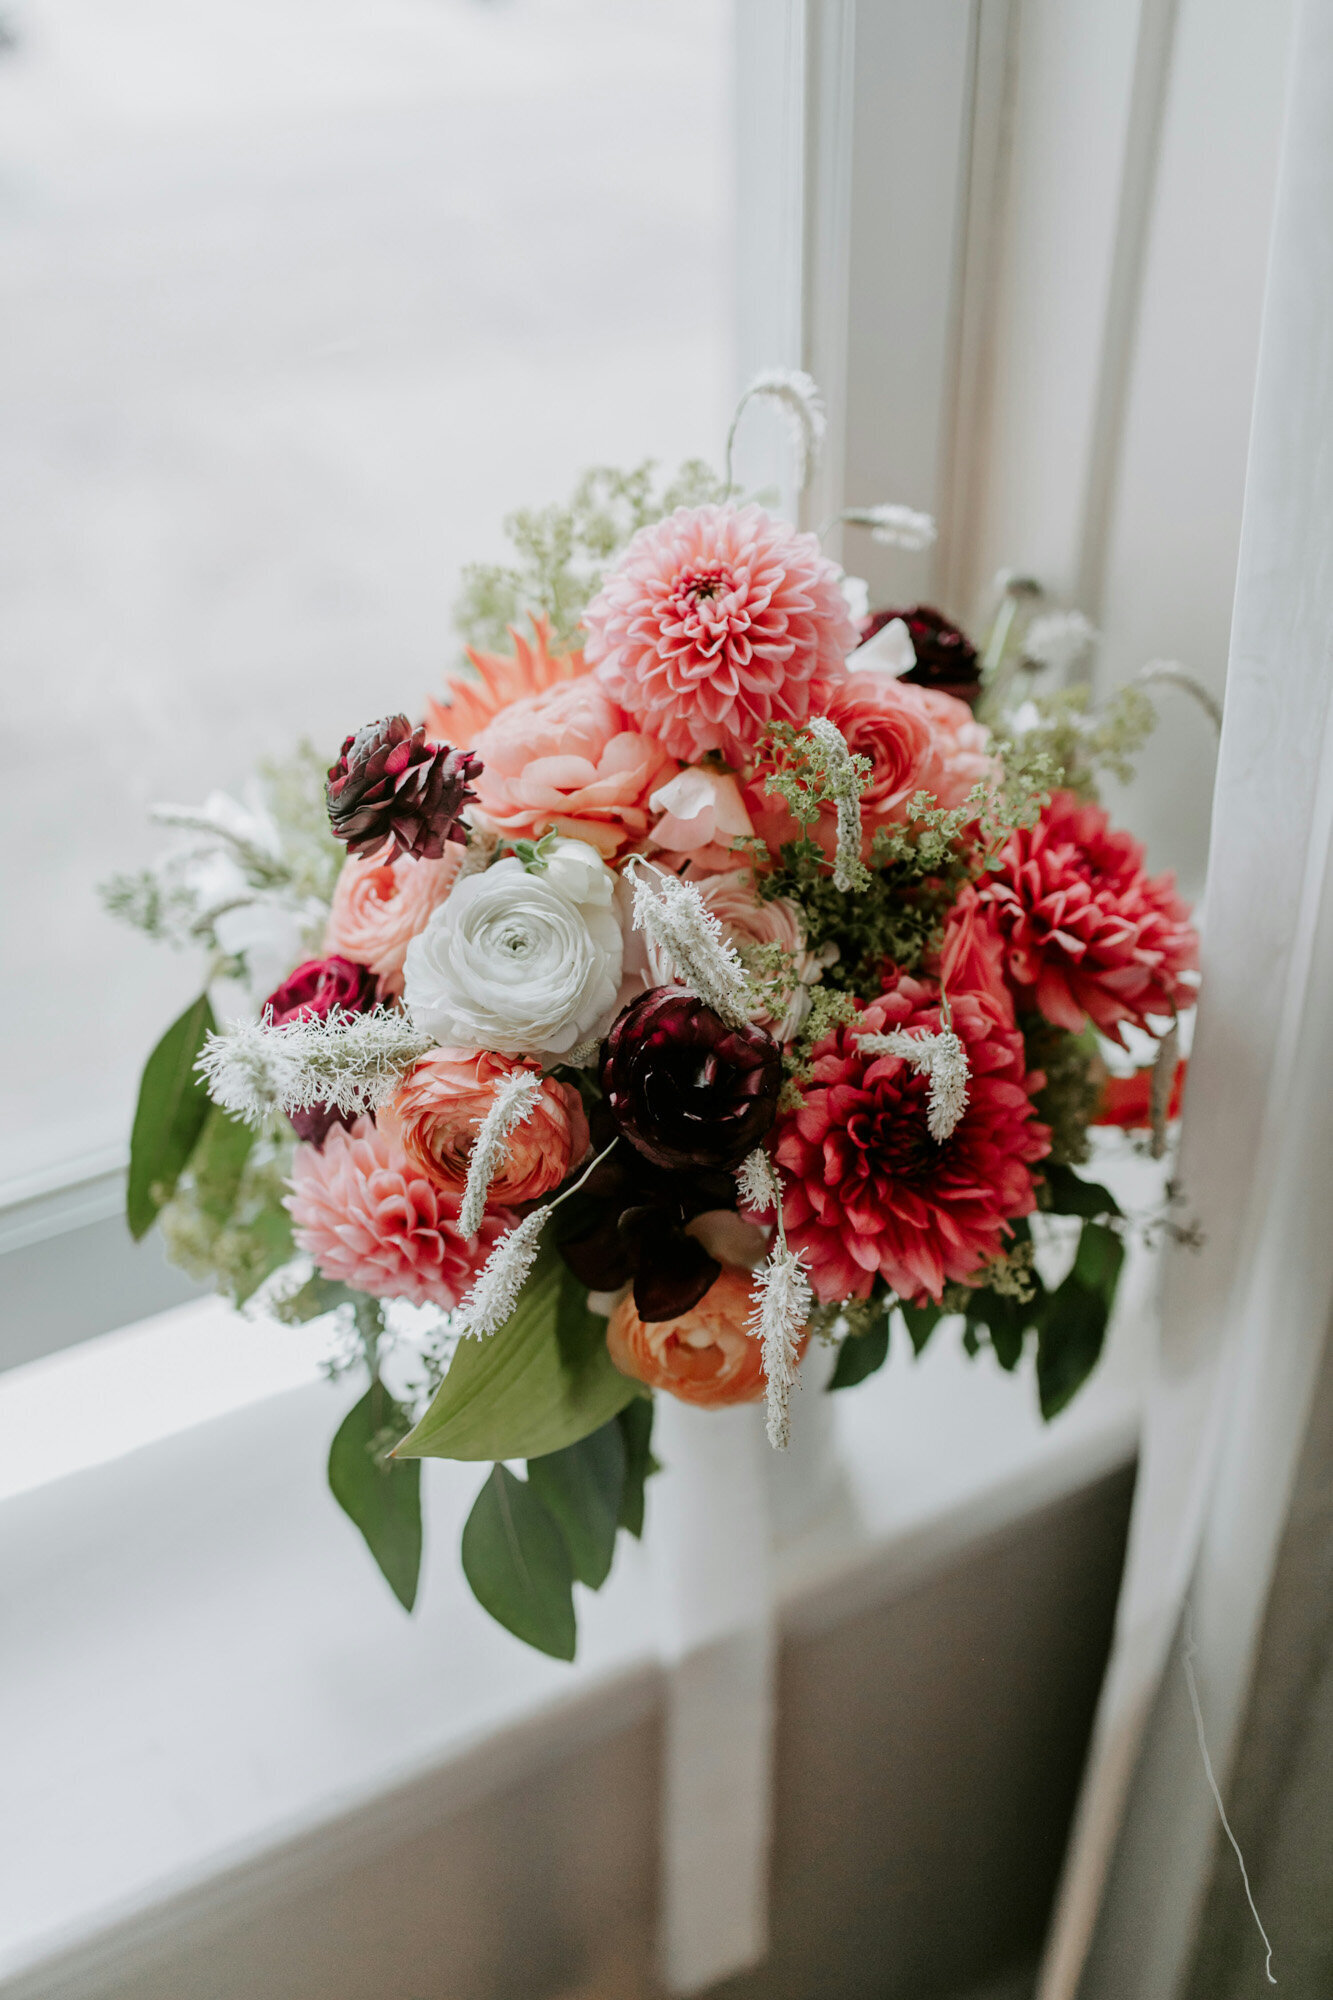 Luxurious and elegant floral bouquet